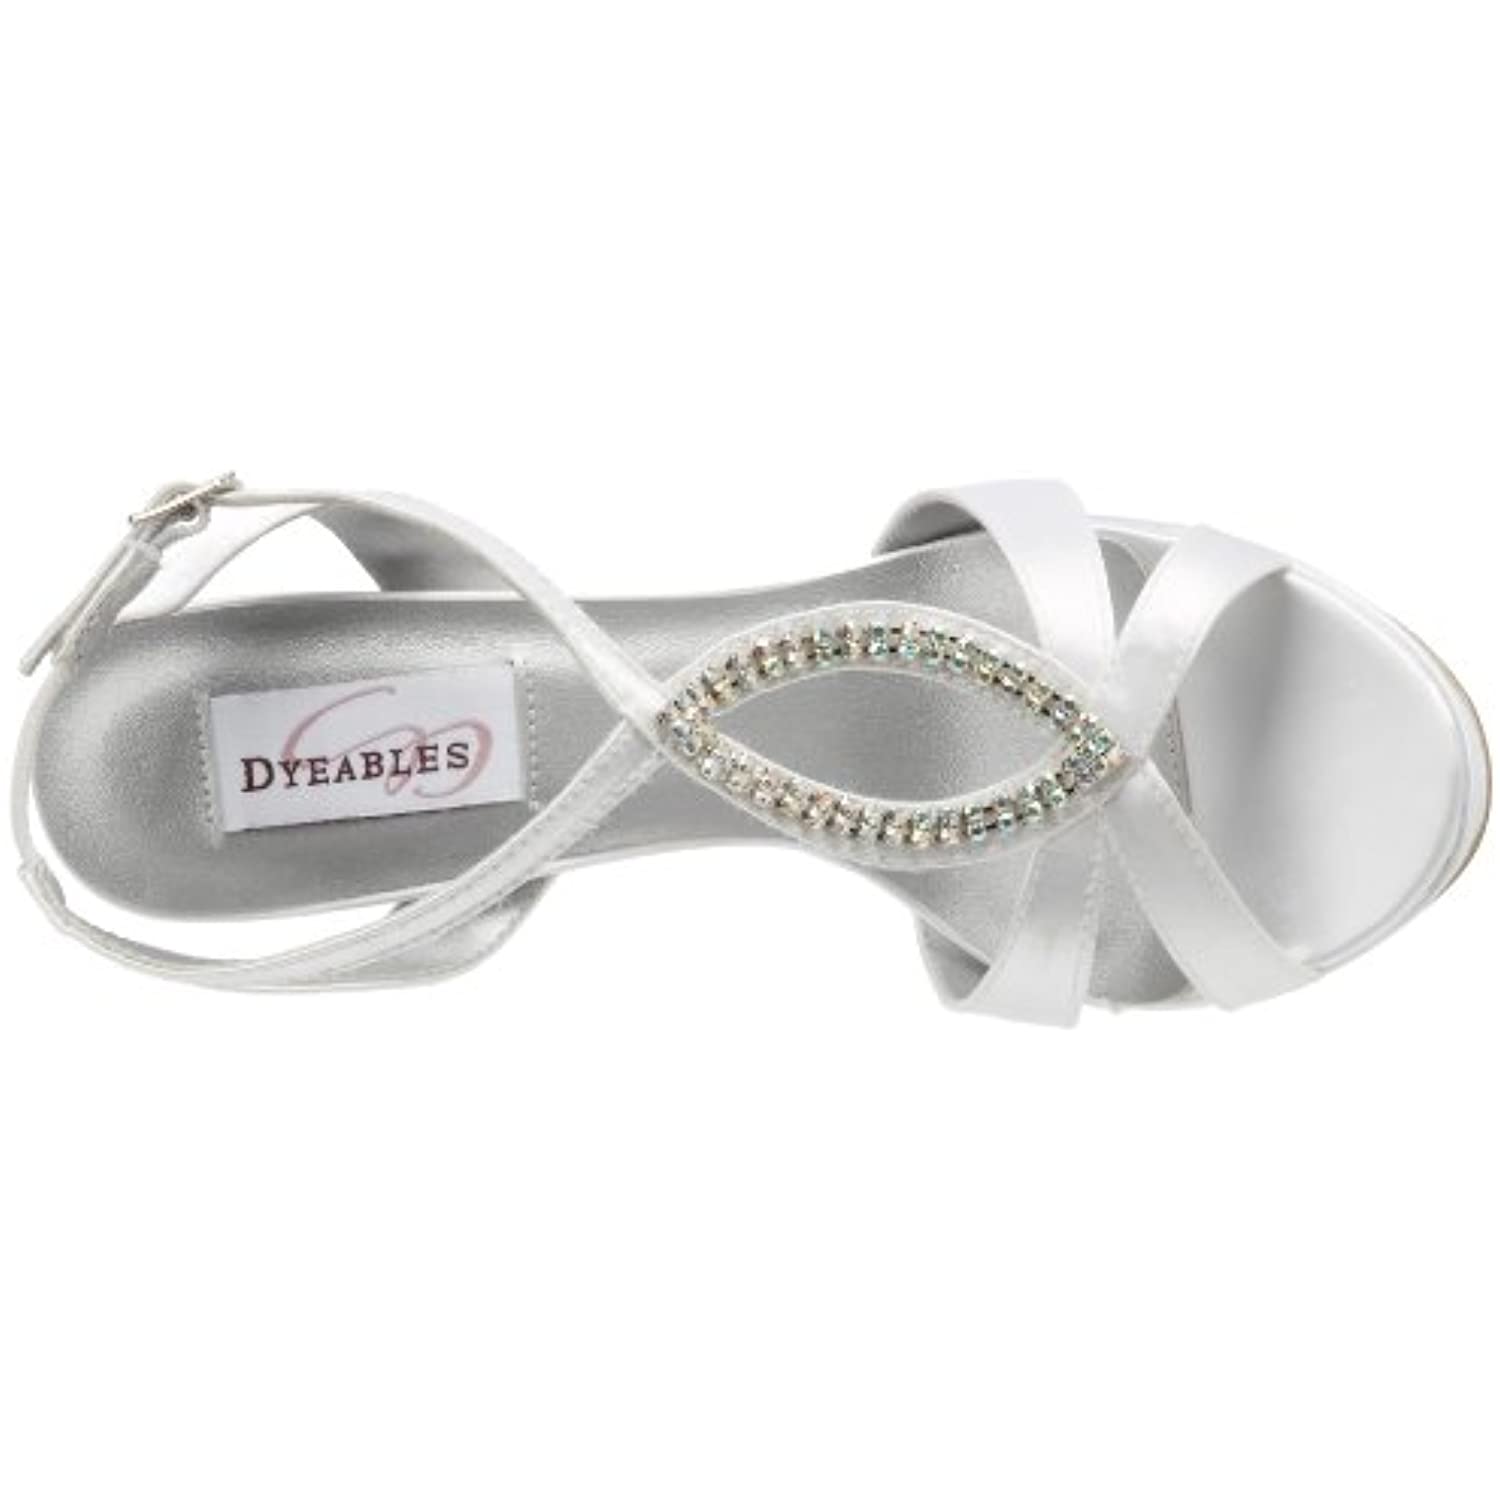 Dyeables Women's Hope Platform Sandal,White Satin,7.5 B US